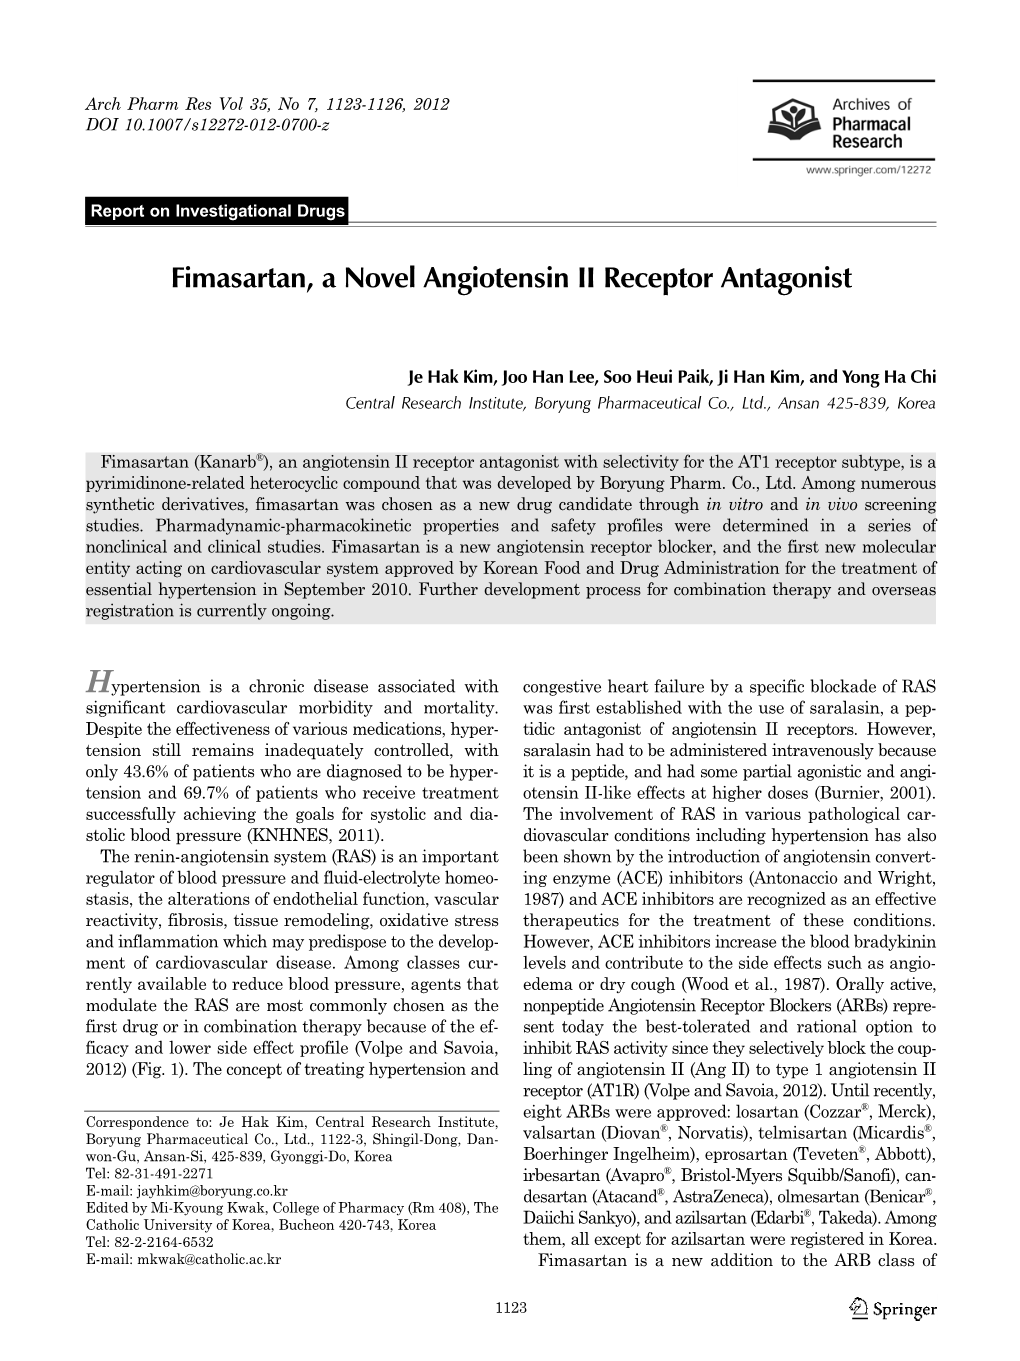 Fimasartan, a Novel Angiotensin II Receptor Antagonist